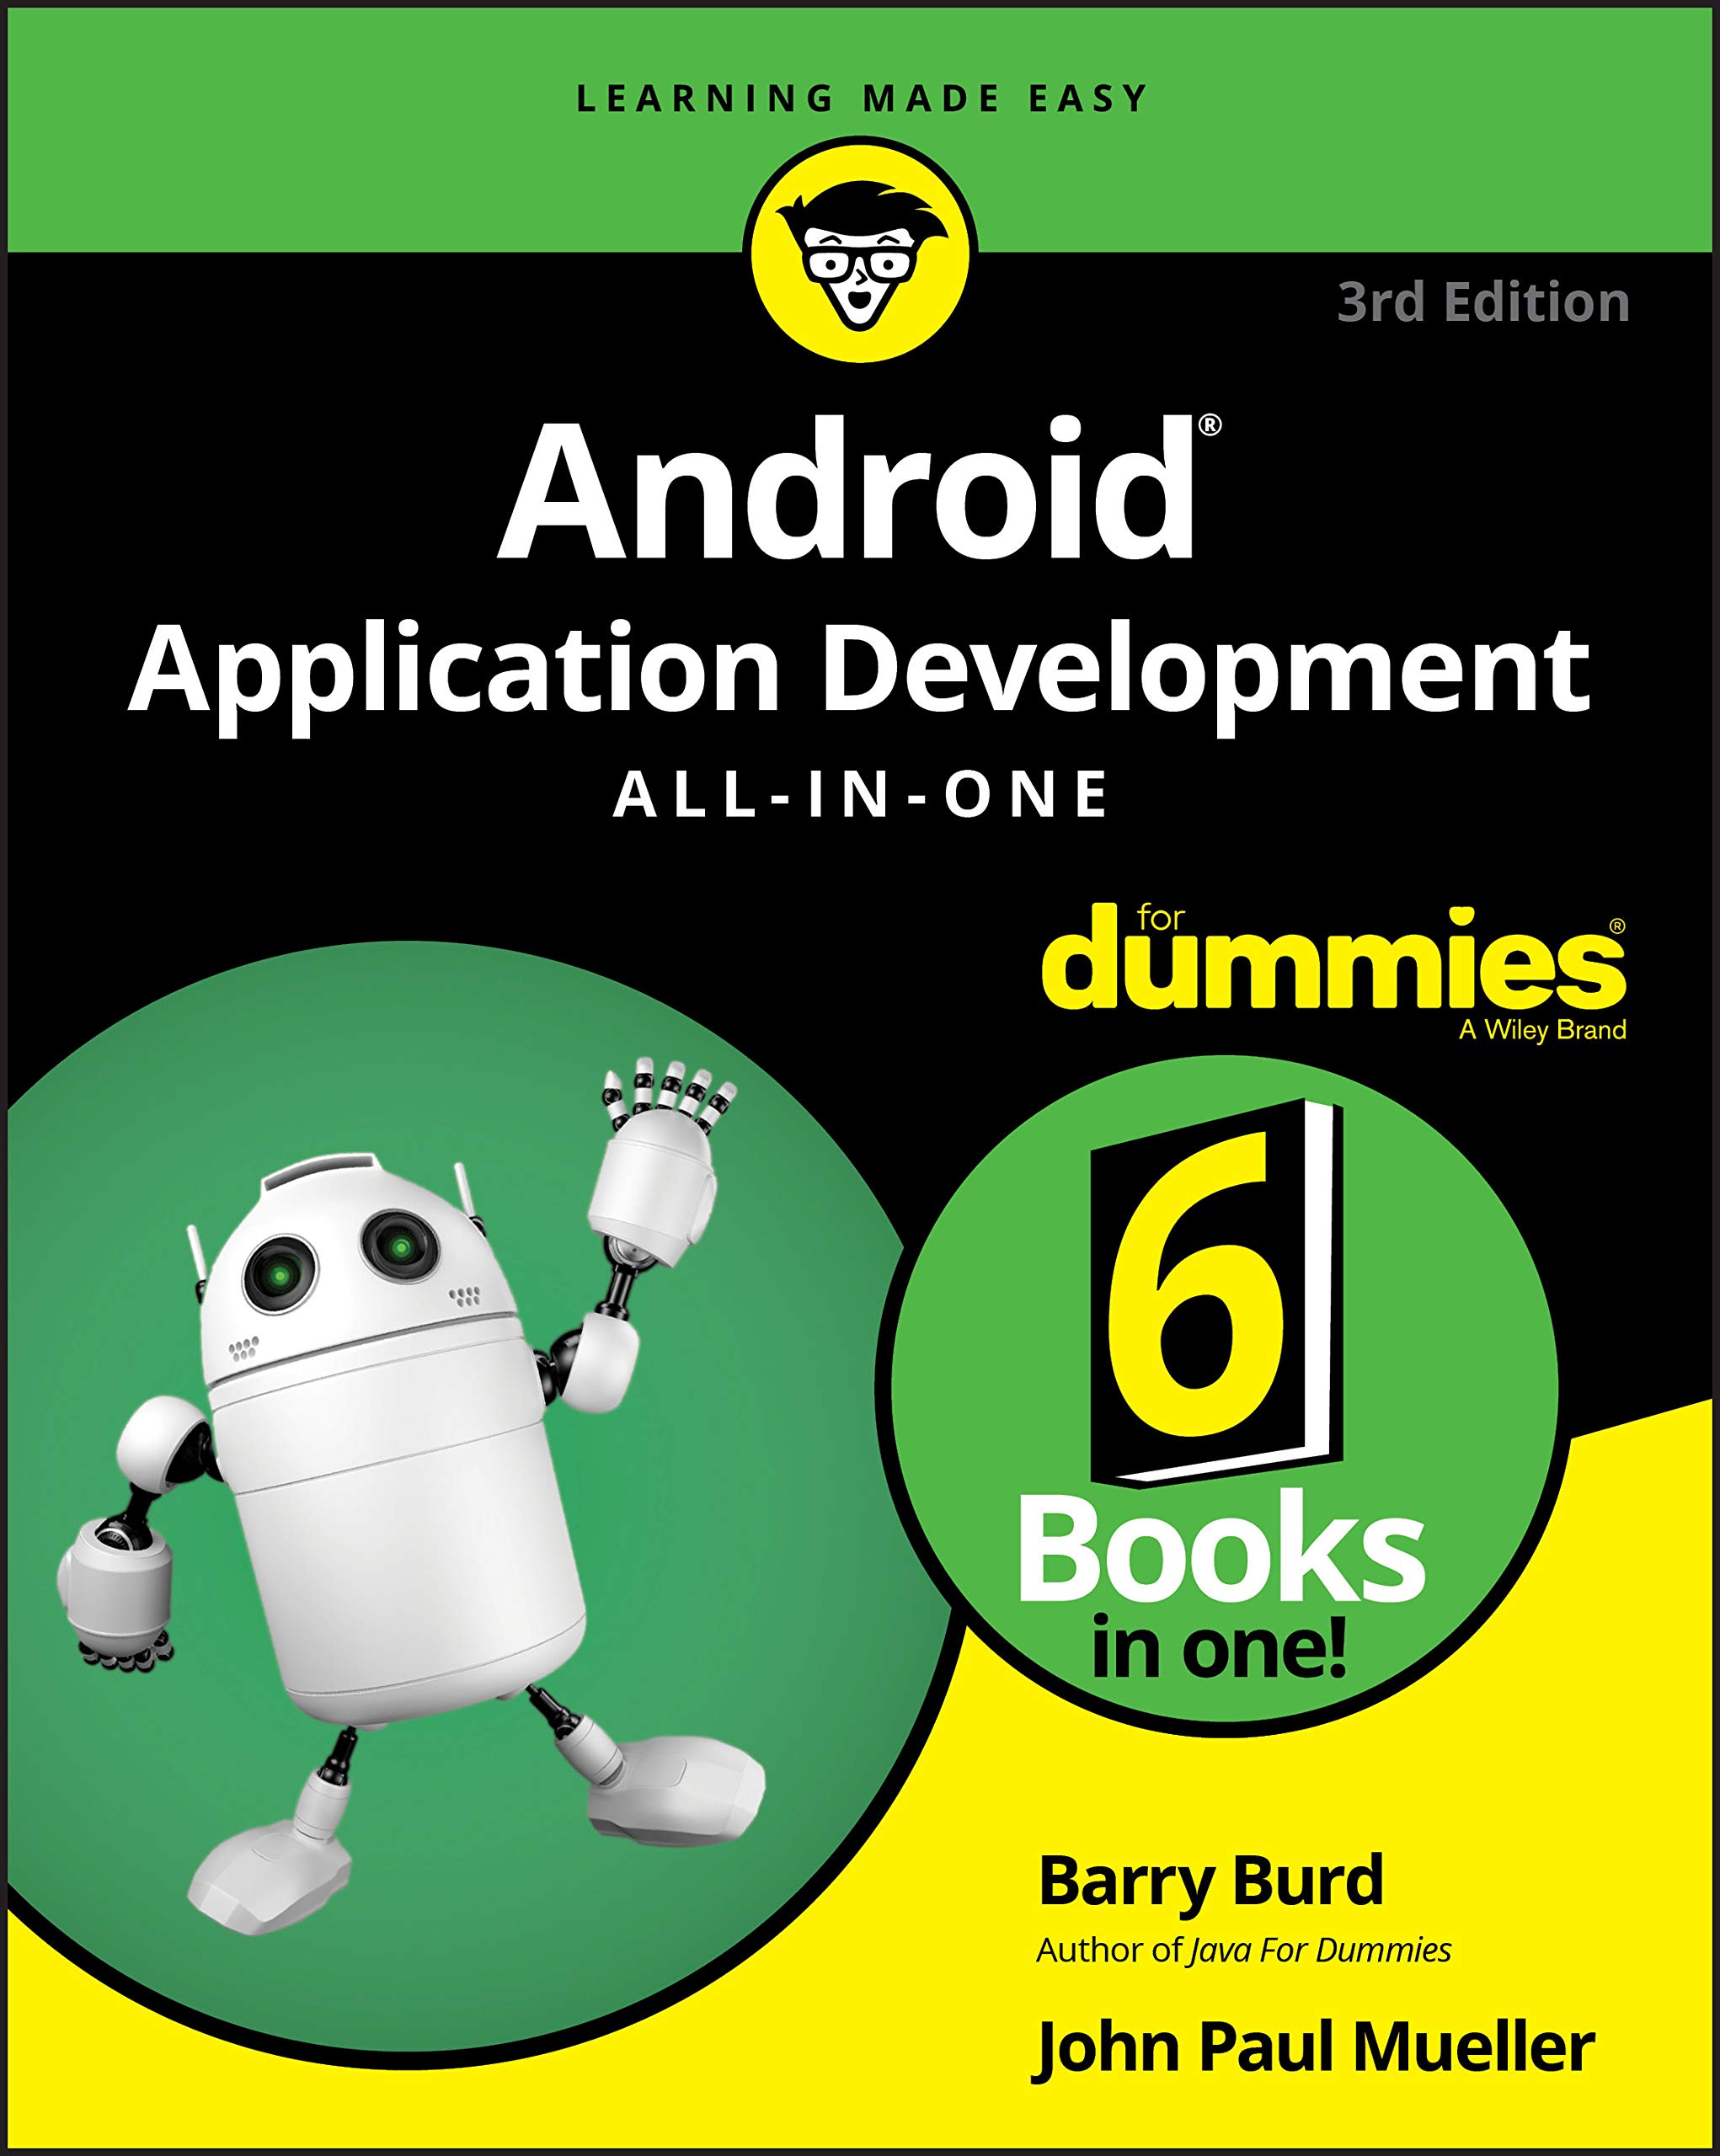 Android Application Development | Barry Burd, John Paul Mueller